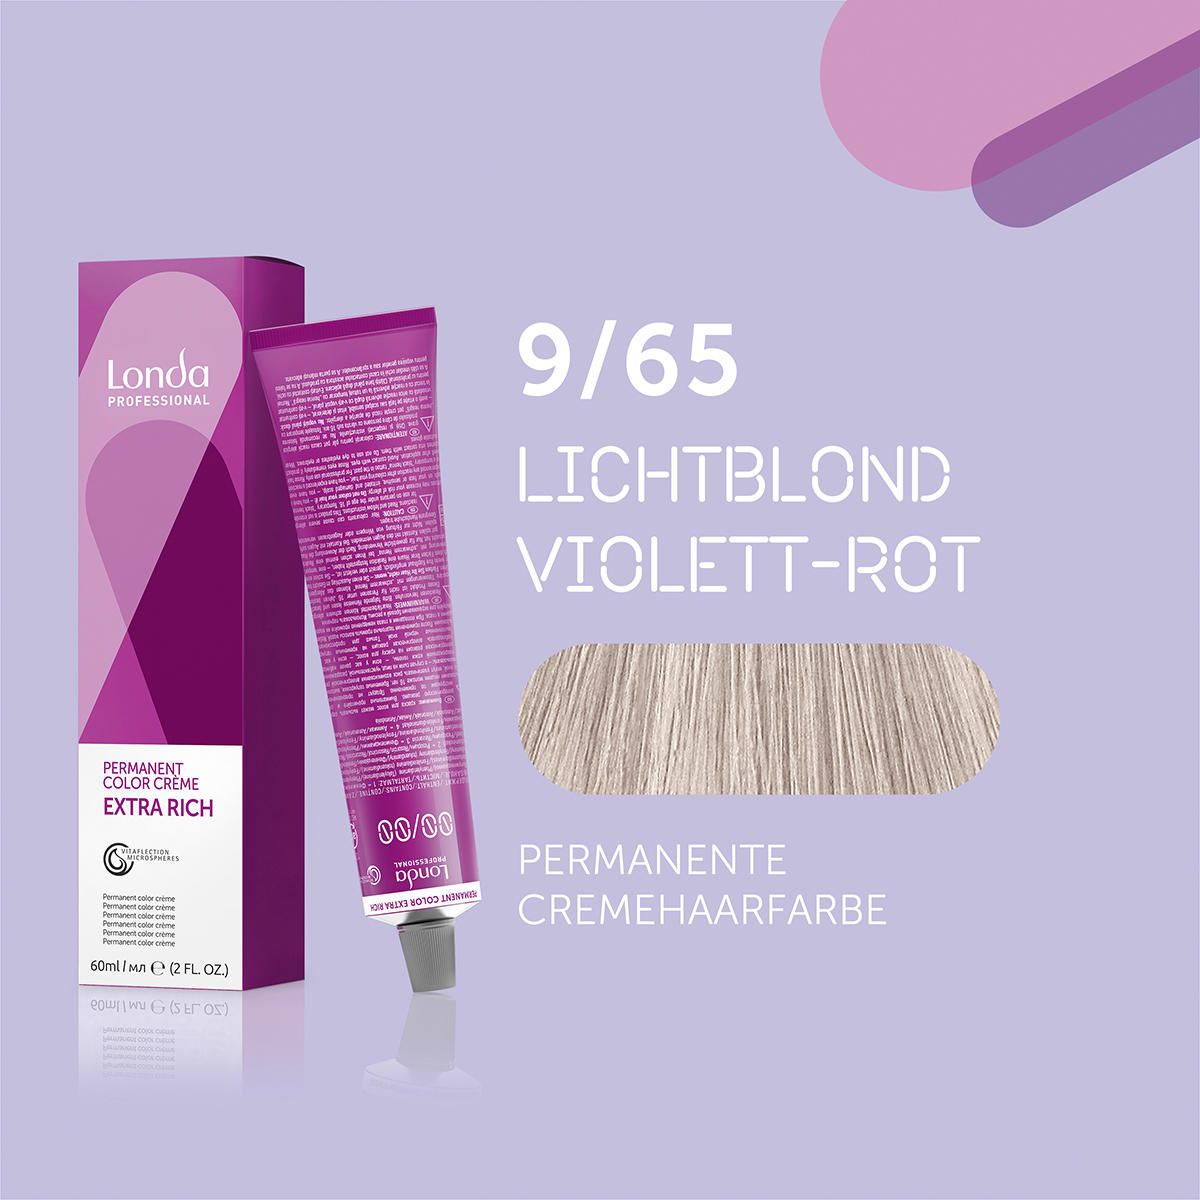 Londa Permanente Cremehaarfarbe Extra Rich 9/65 Lichtblond Violett Rot, Tube 60 ml - 1